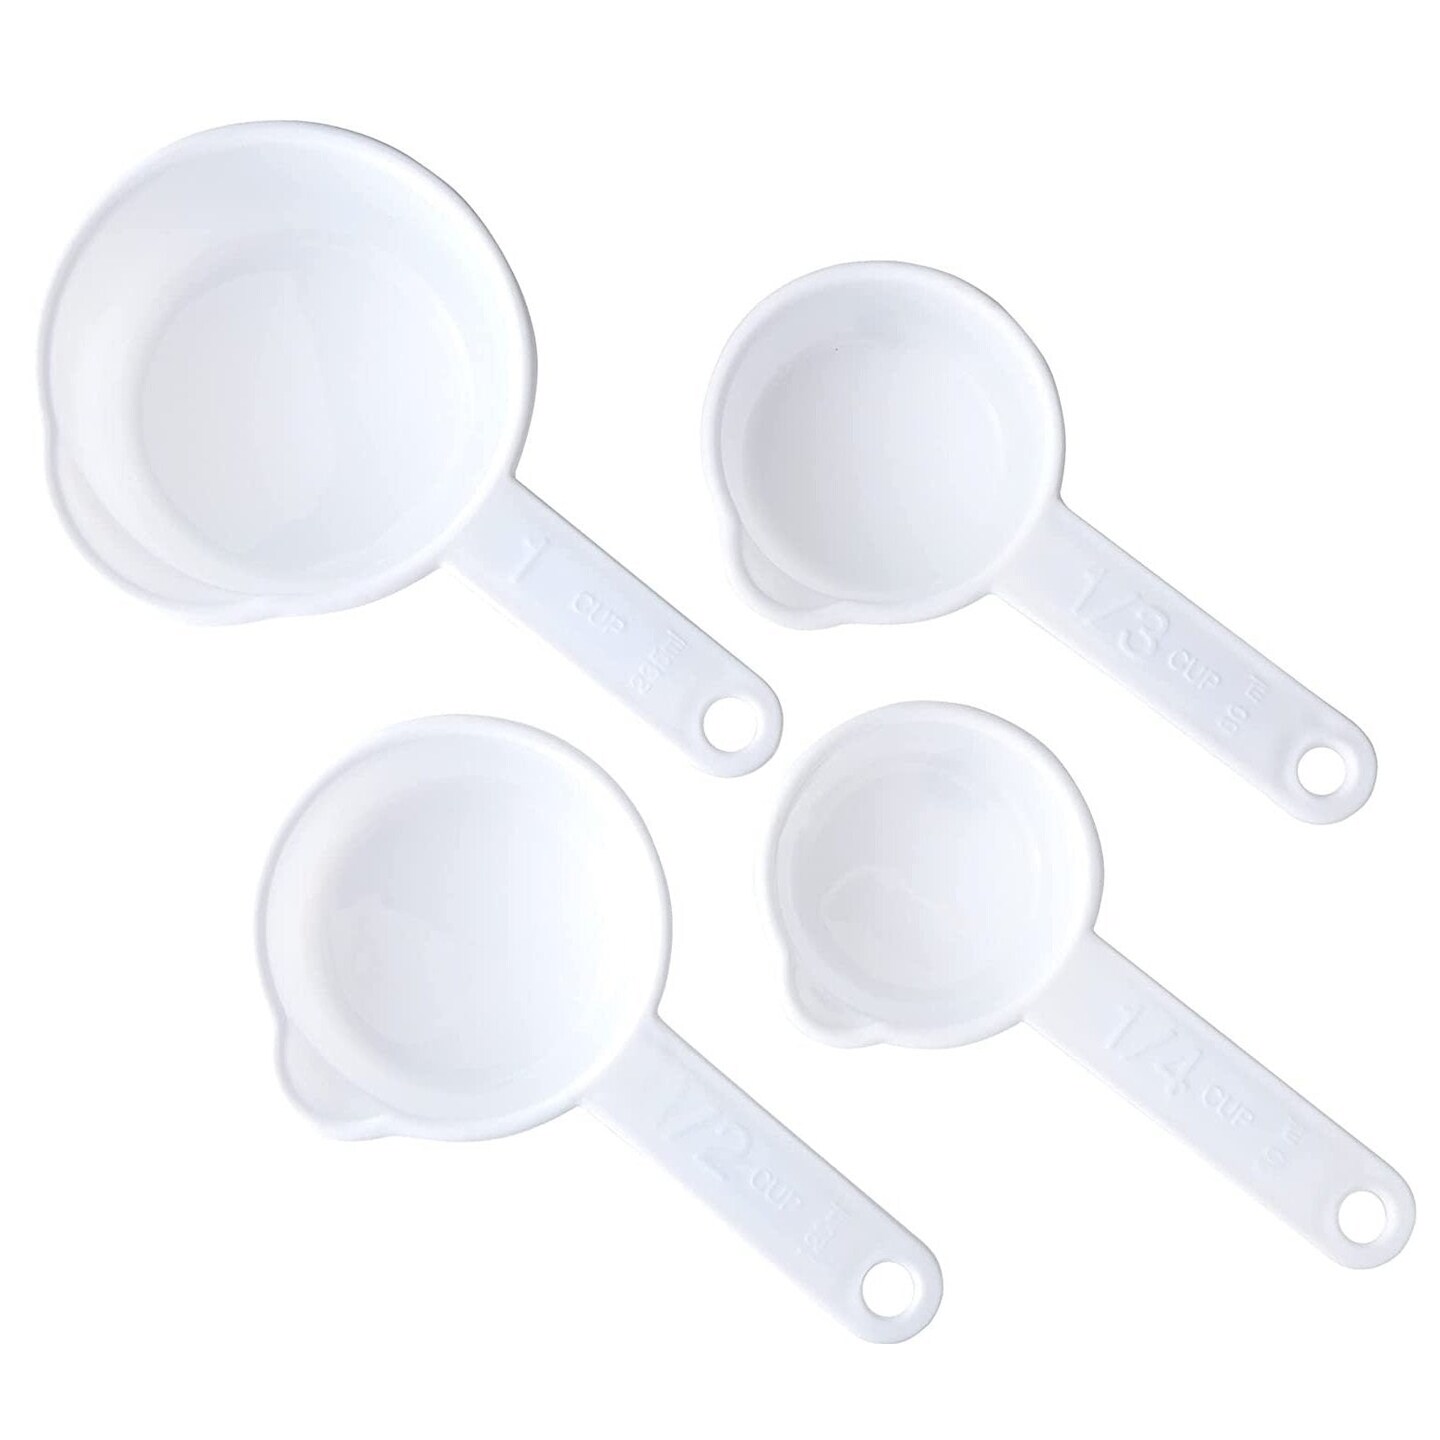 6 Piece Plastic Measuring Cups - White